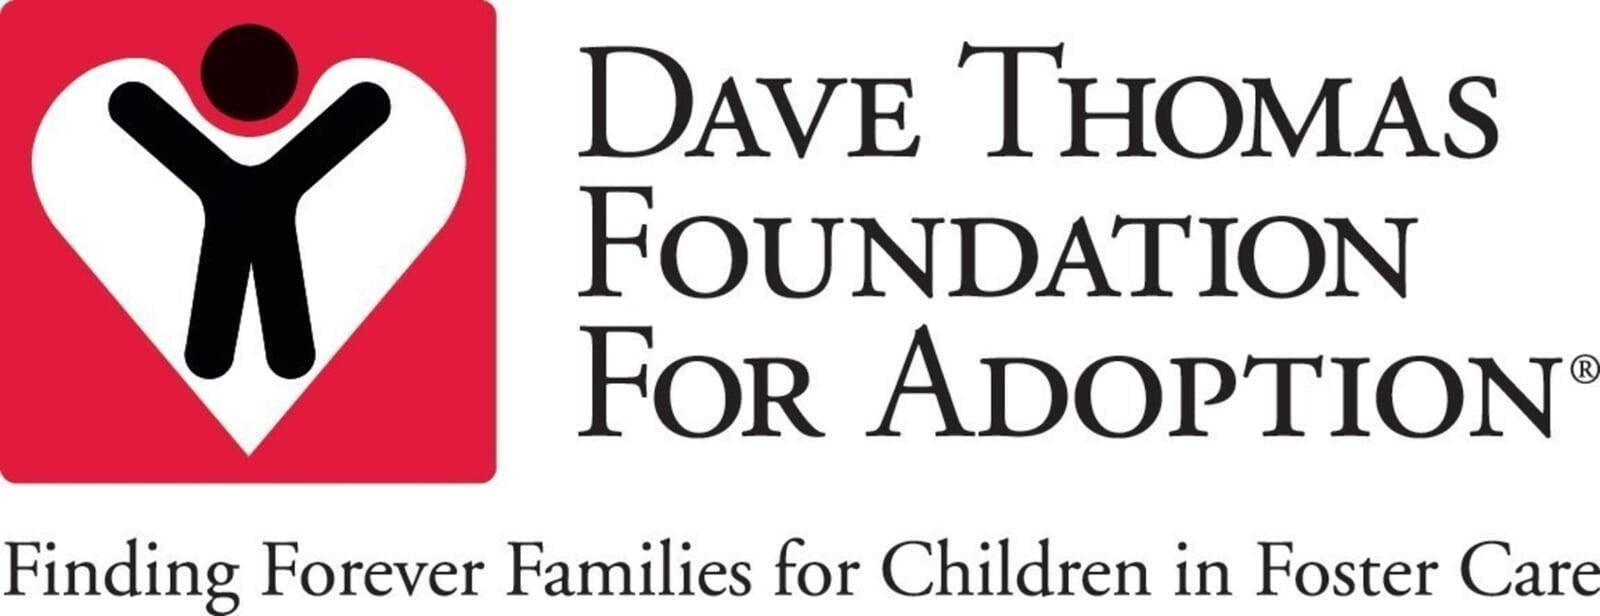 dave thomas foundation for adoption -1-